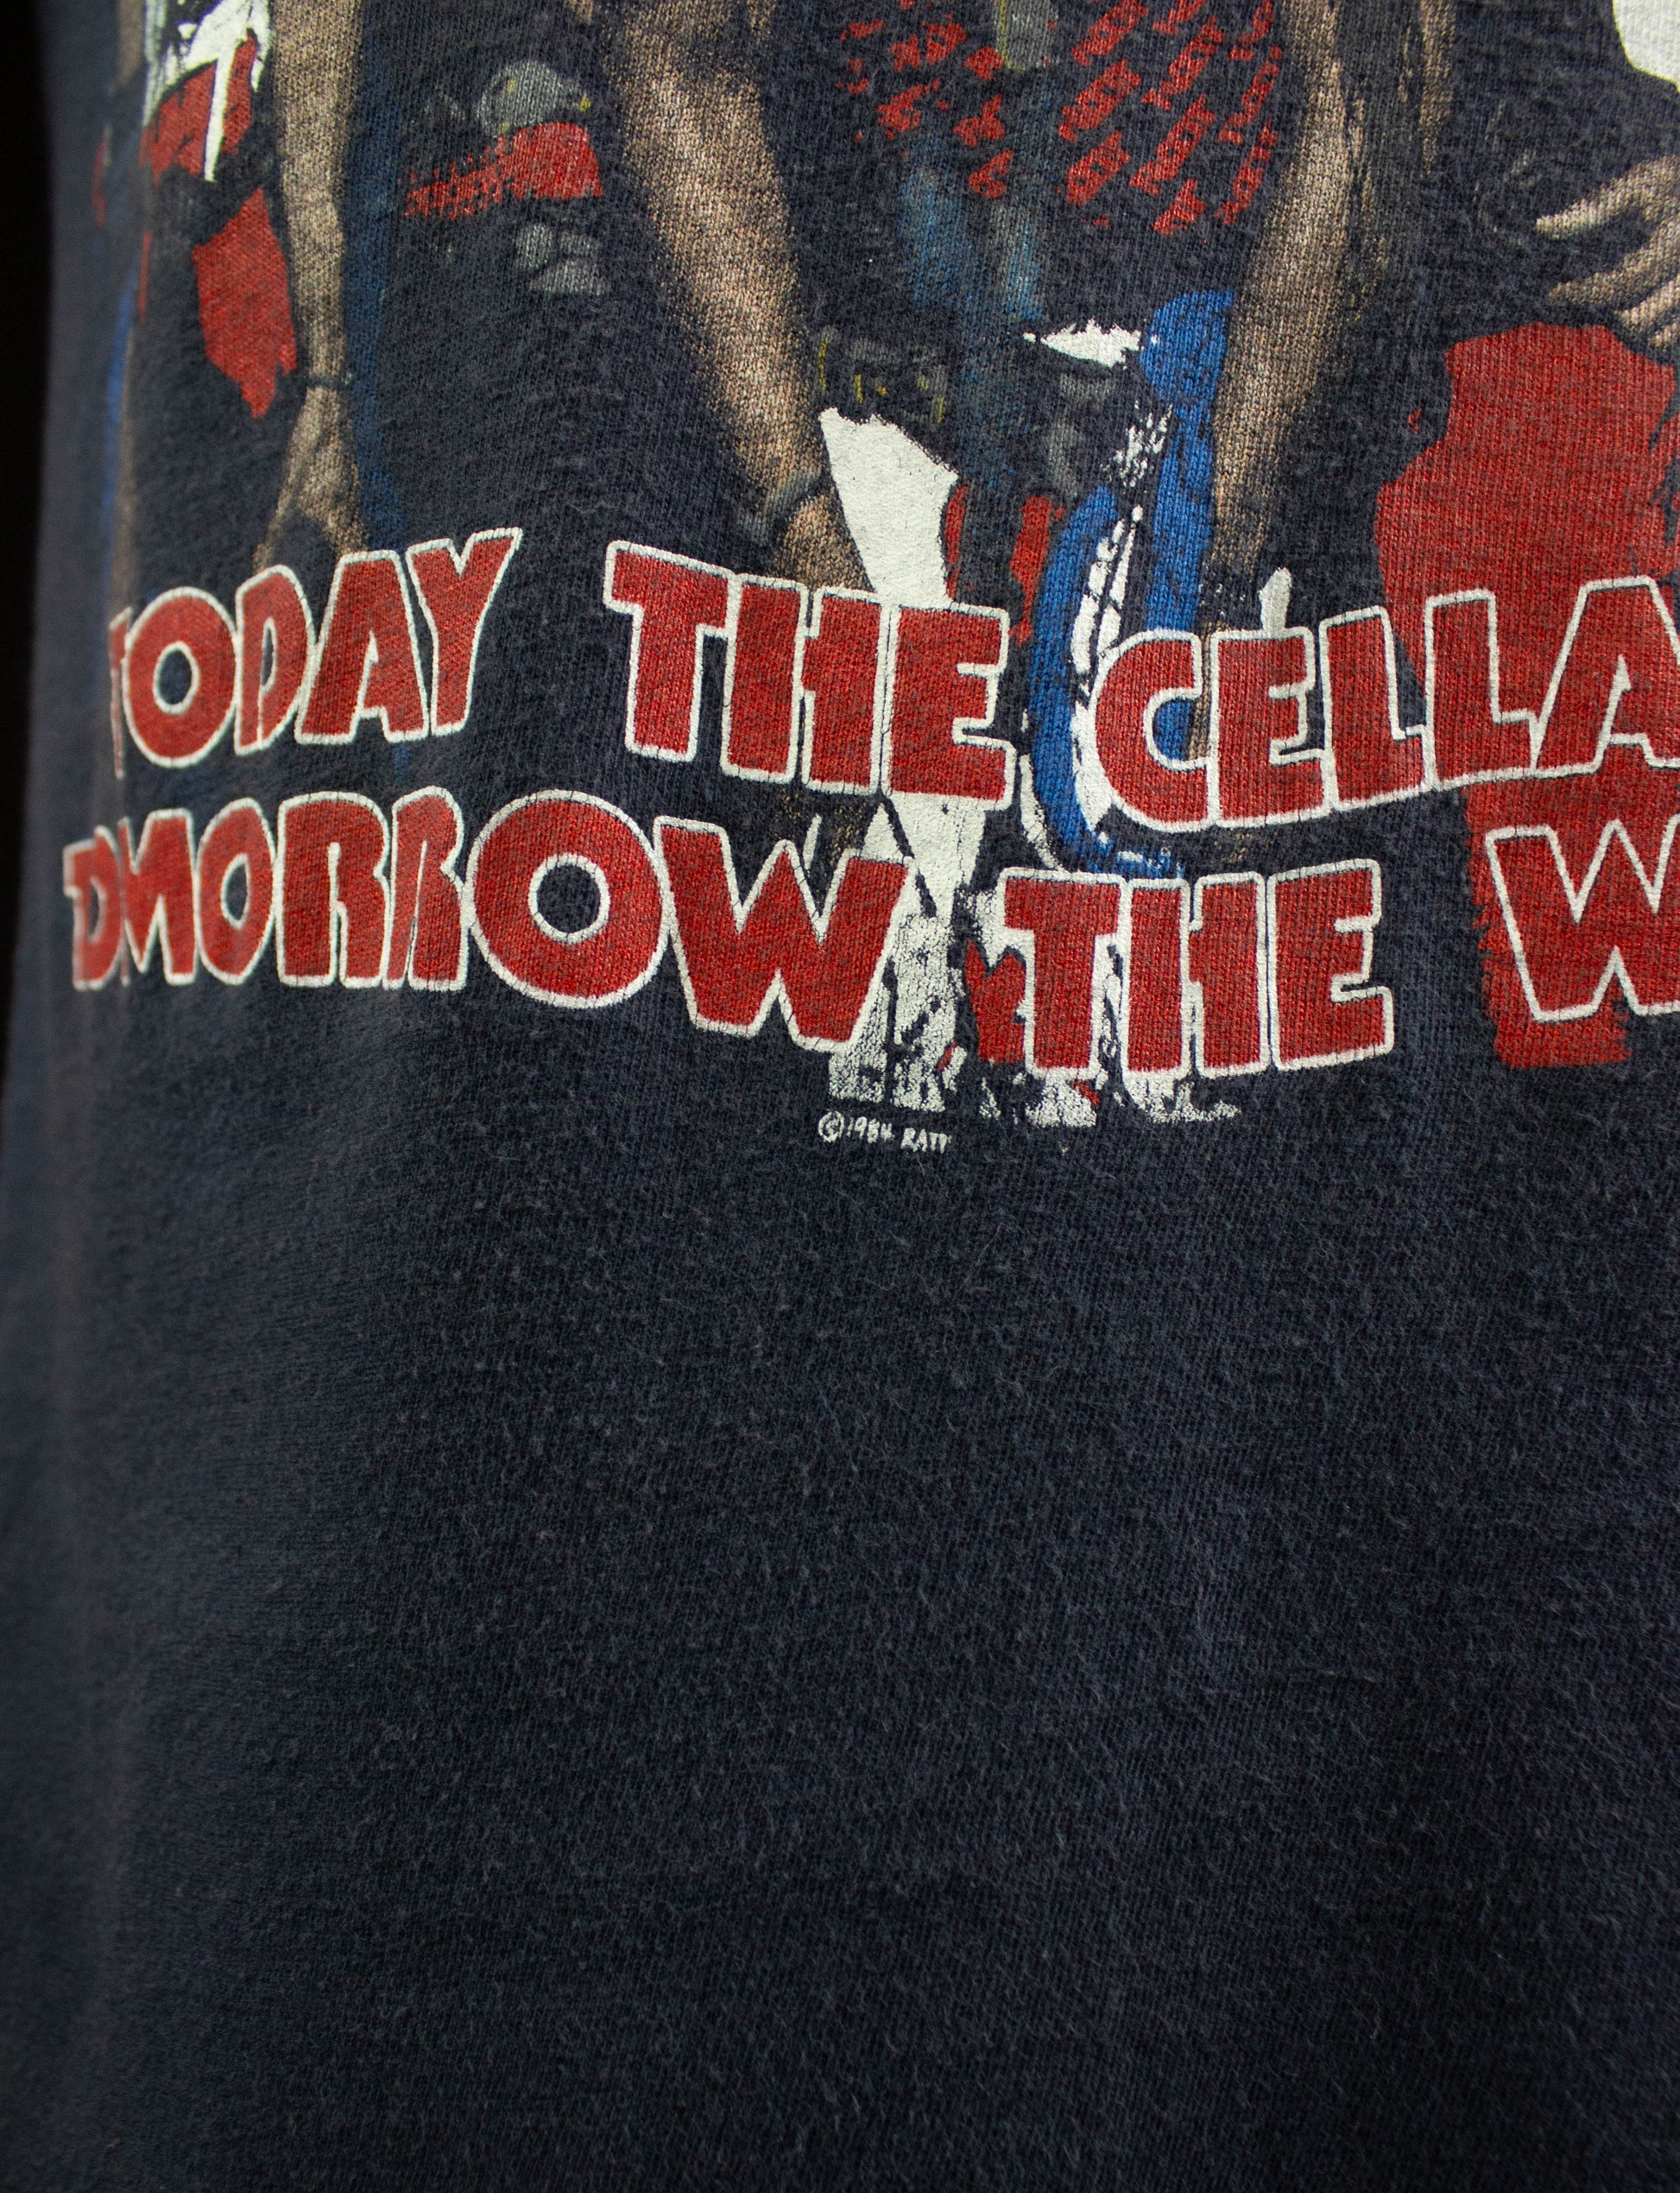 Vintage Ratt Concert T Shirt 1984 Ratt 'N Roll Tour "Today The Cellar...Tomorrow The World" Faded Black Small